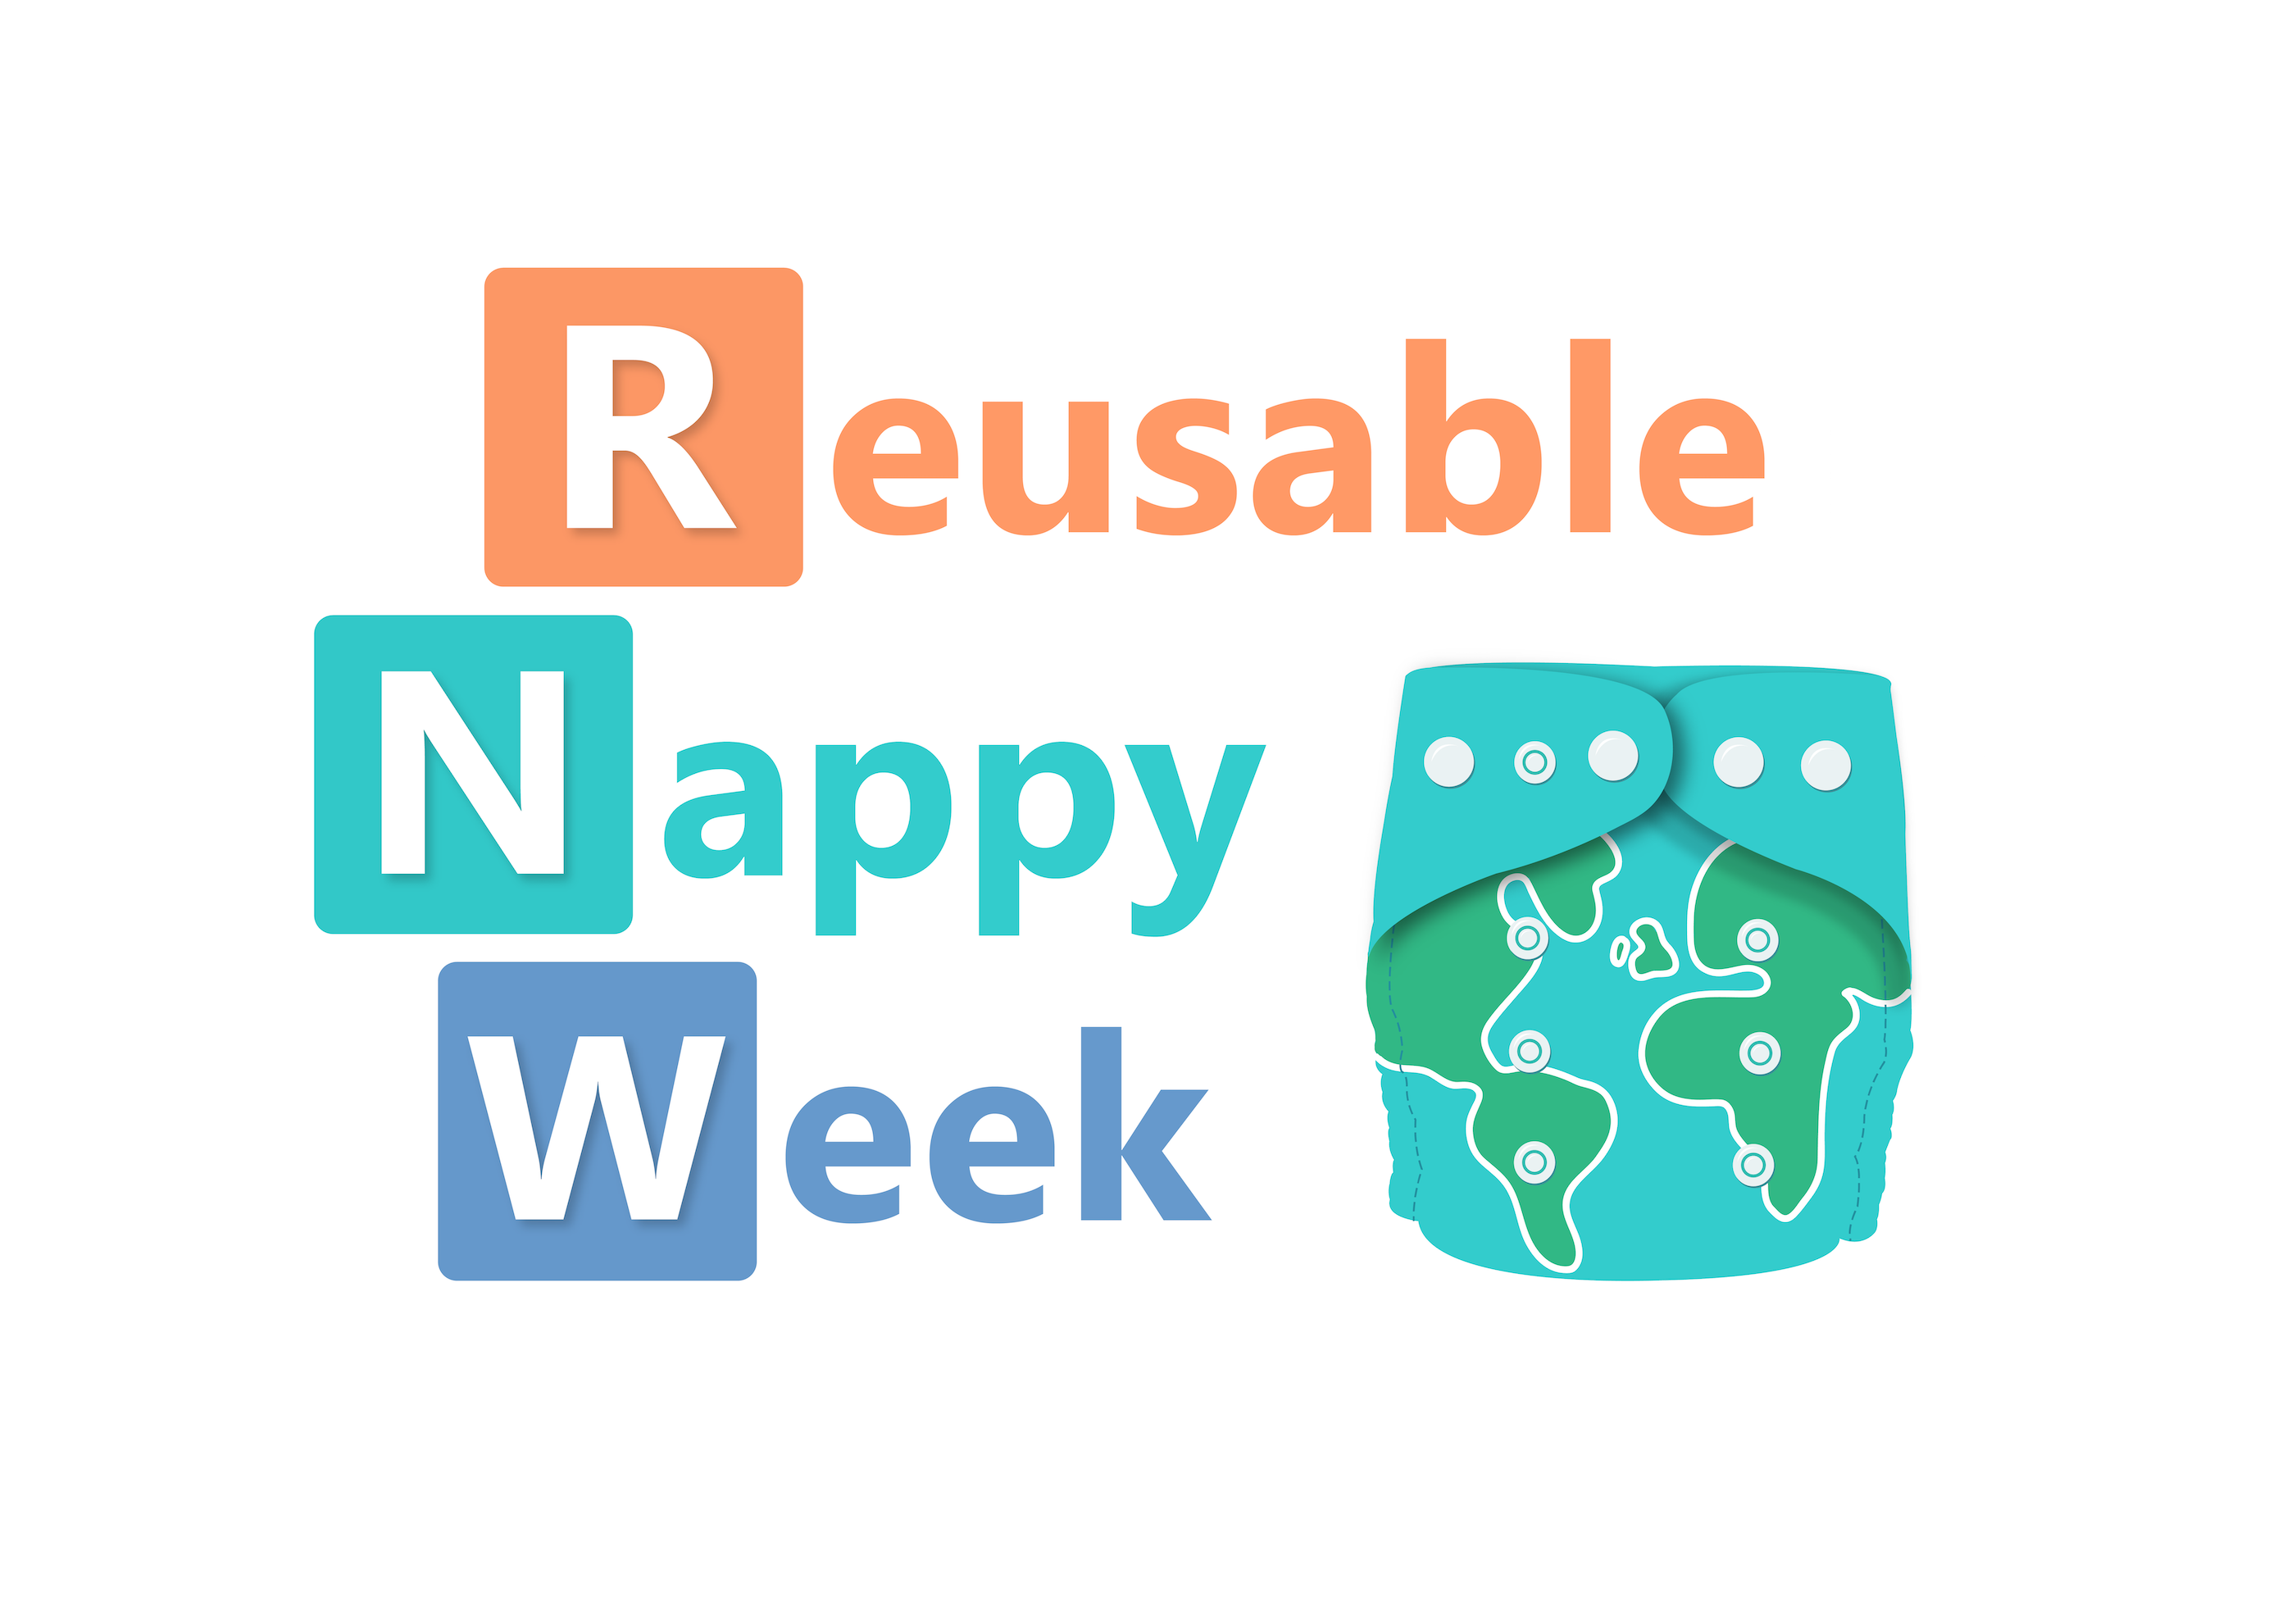 Choose to reuse: Reusable nappy week 2024, maandag 22 t/m zondag 28 april 2024